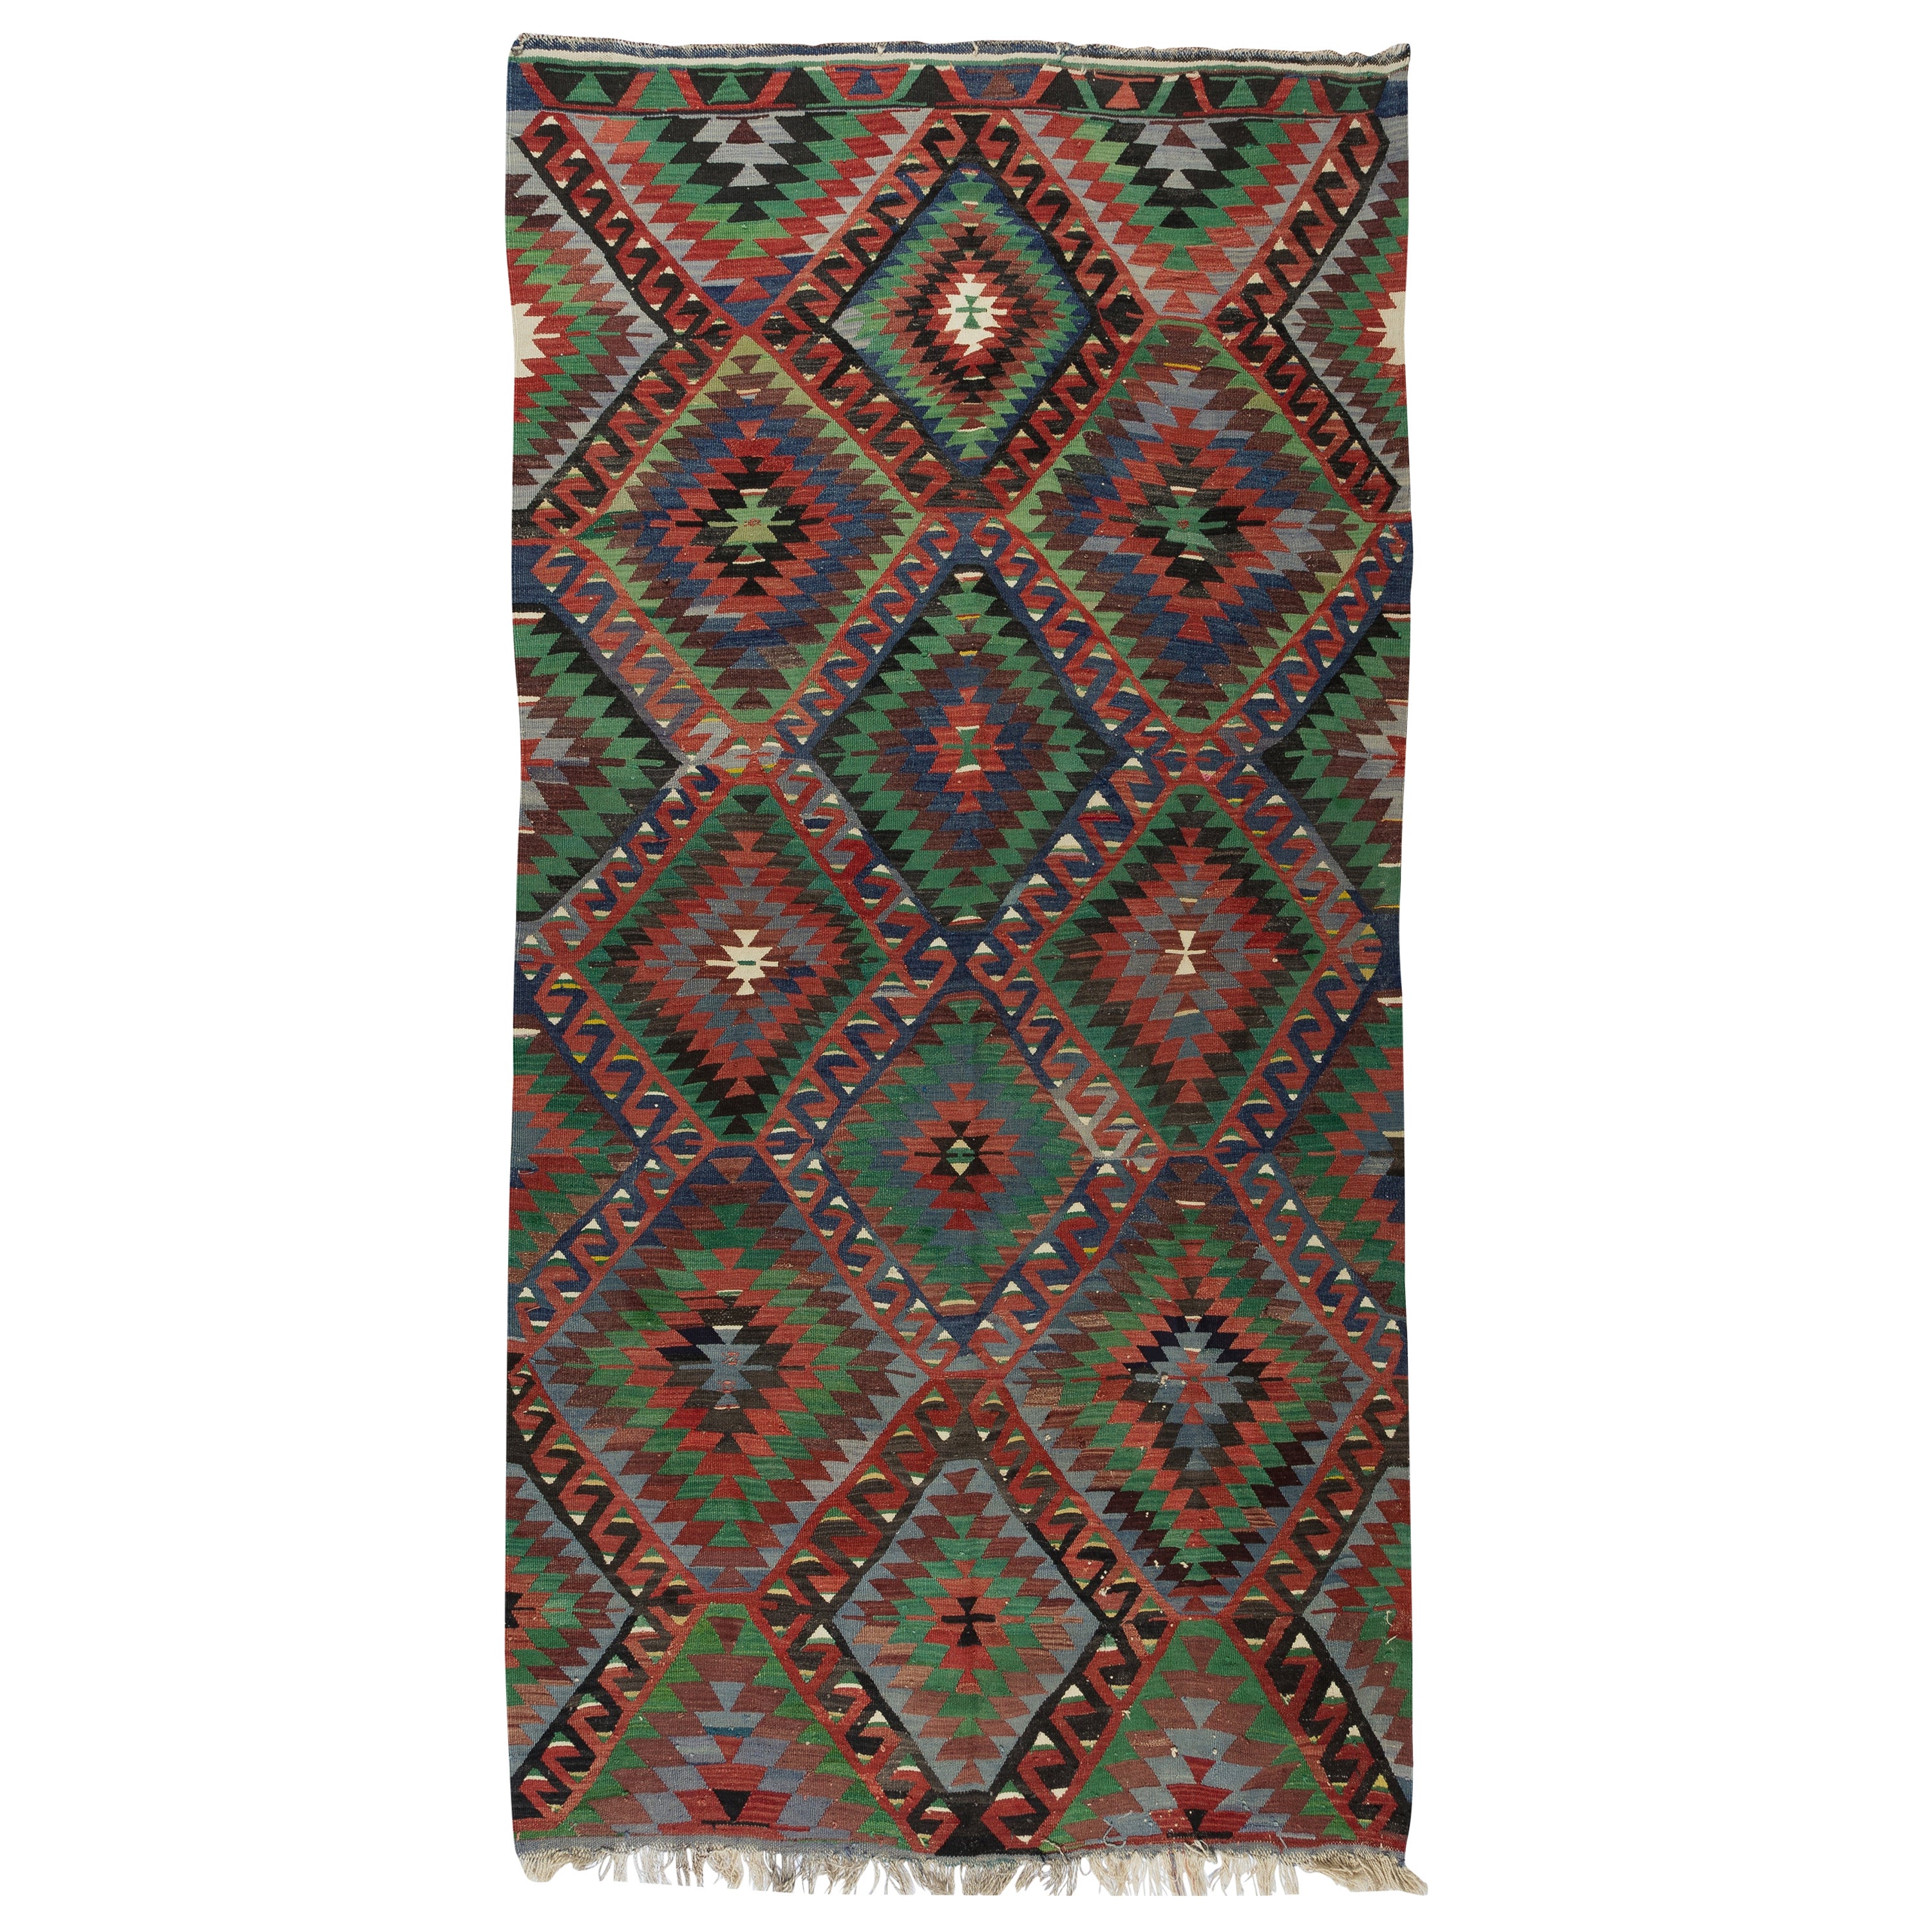 5.7x10.8 Ft Handmade Turkish Kilim, Vintage Flat-Weave Rug, Colorful Wool Carpet For Sale